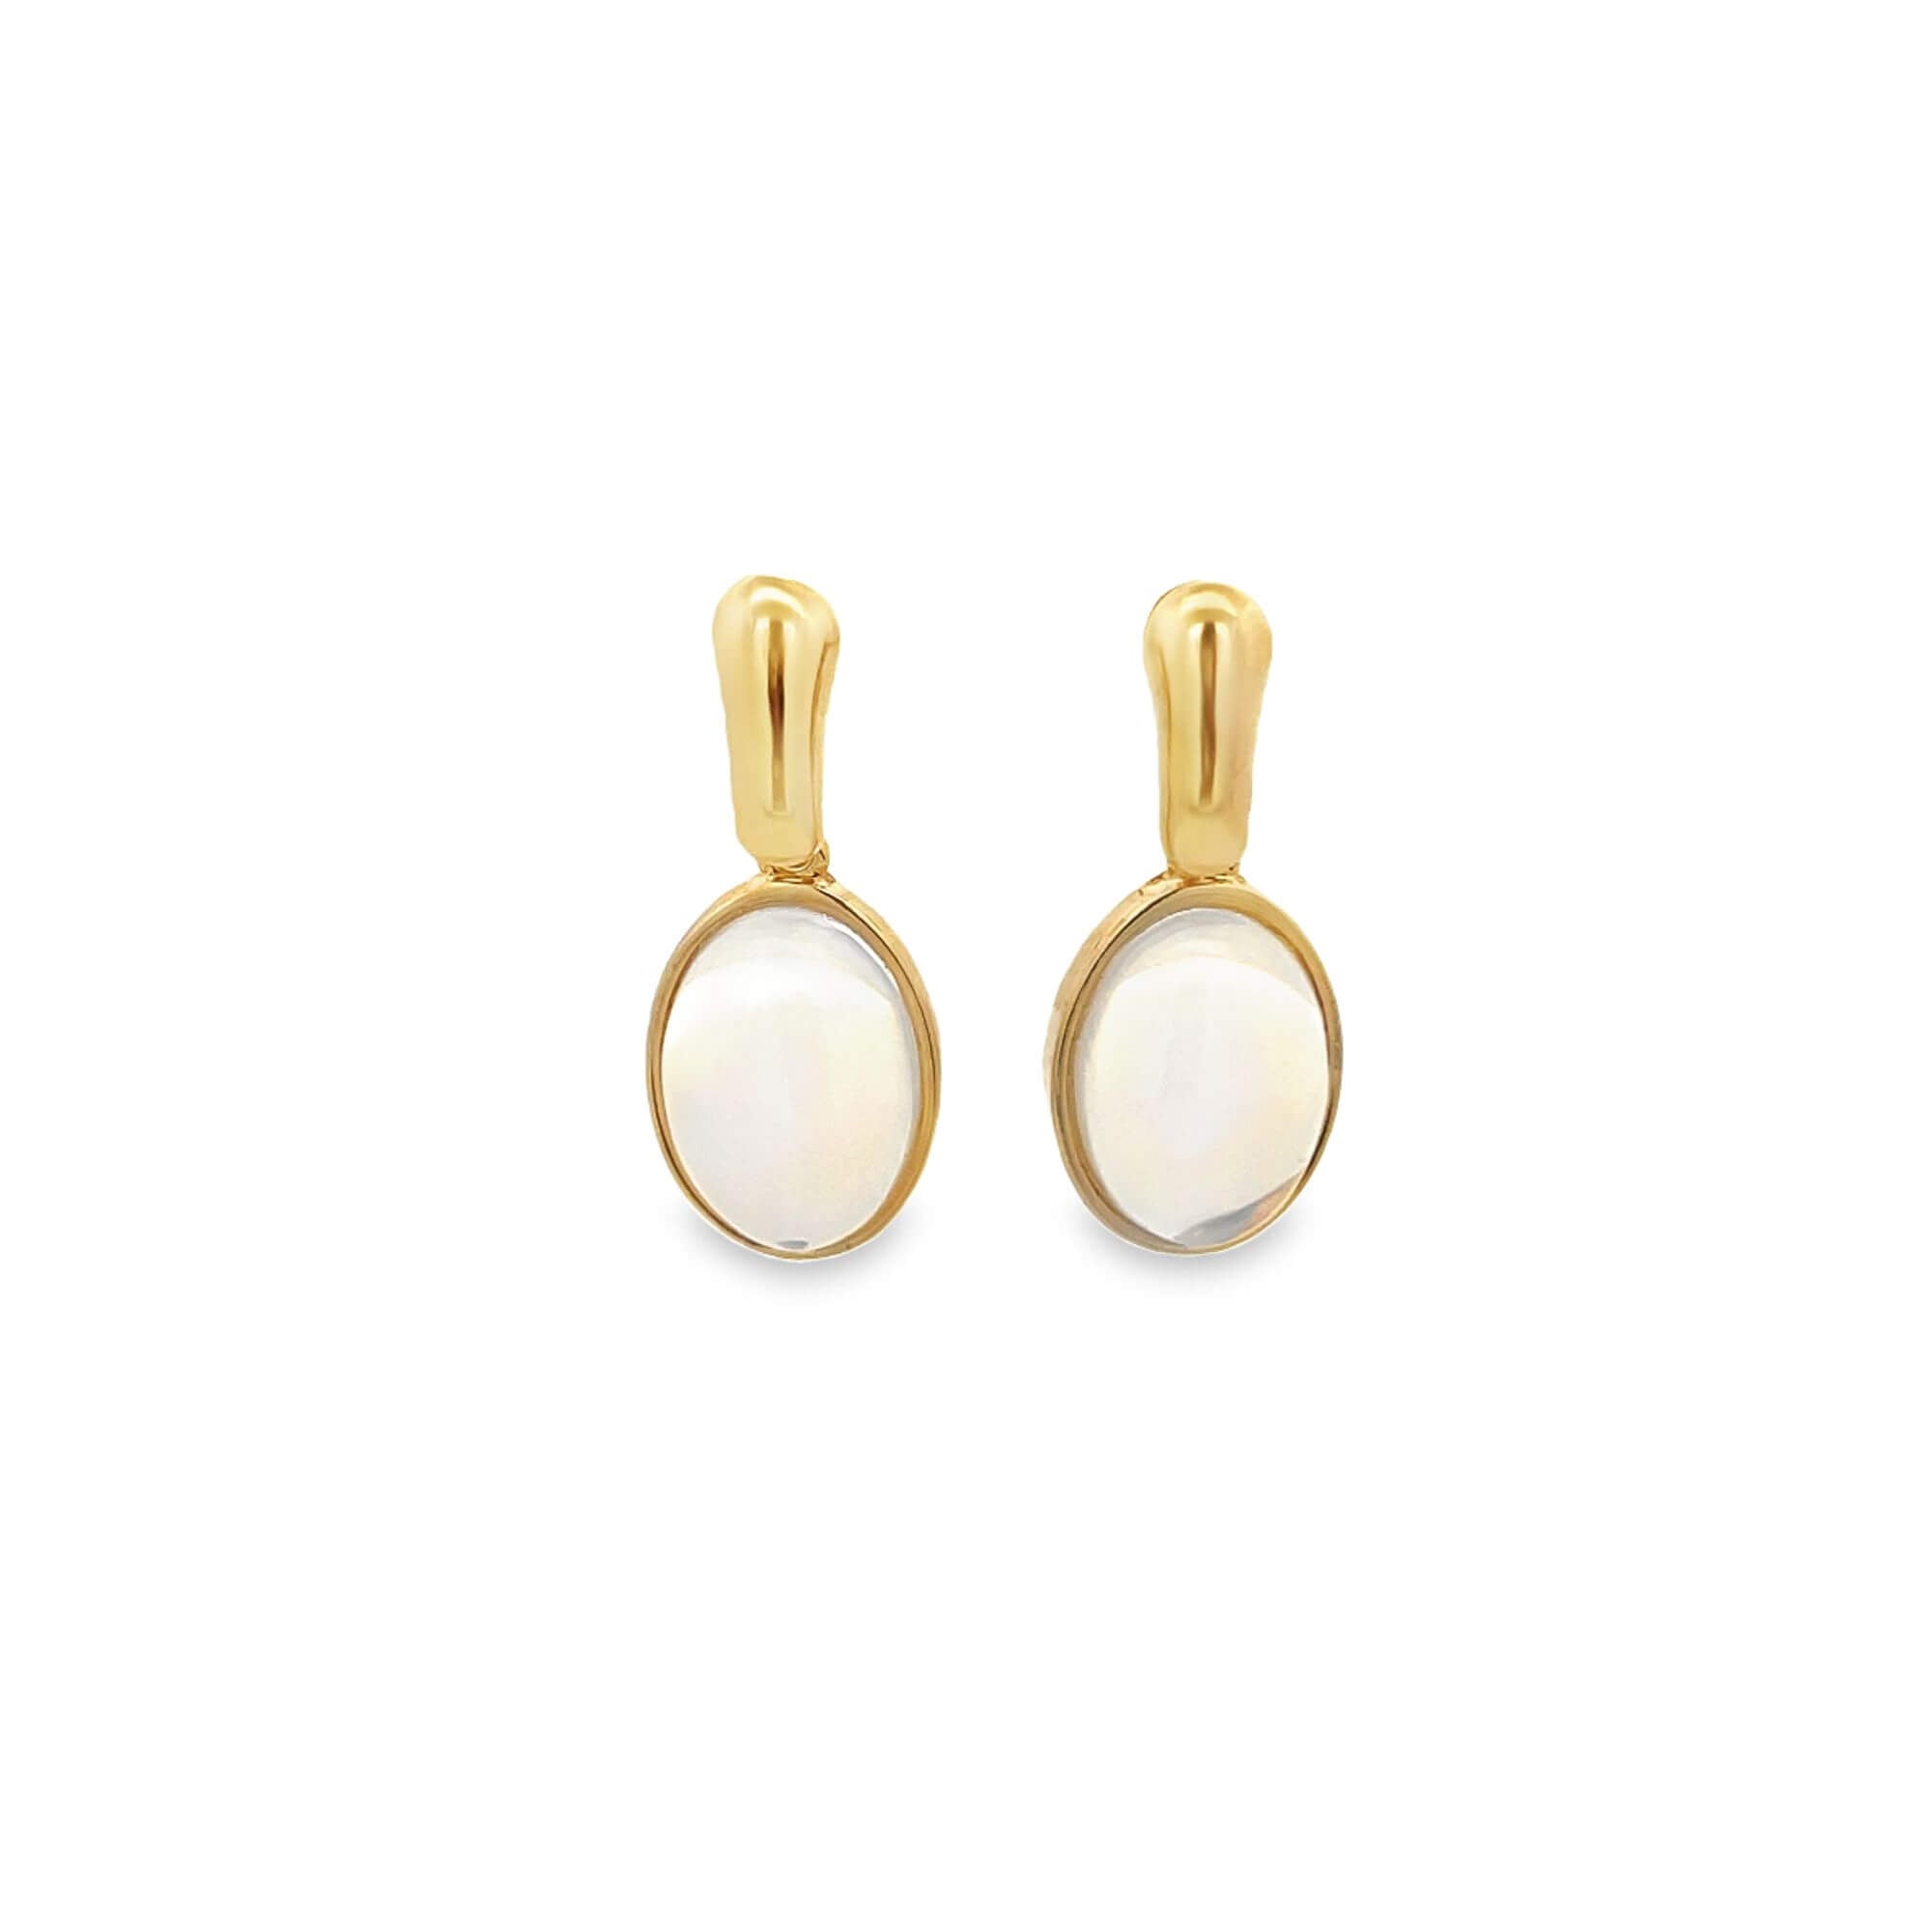 Oval Natural Gemstone Drop Earrings (K198A)